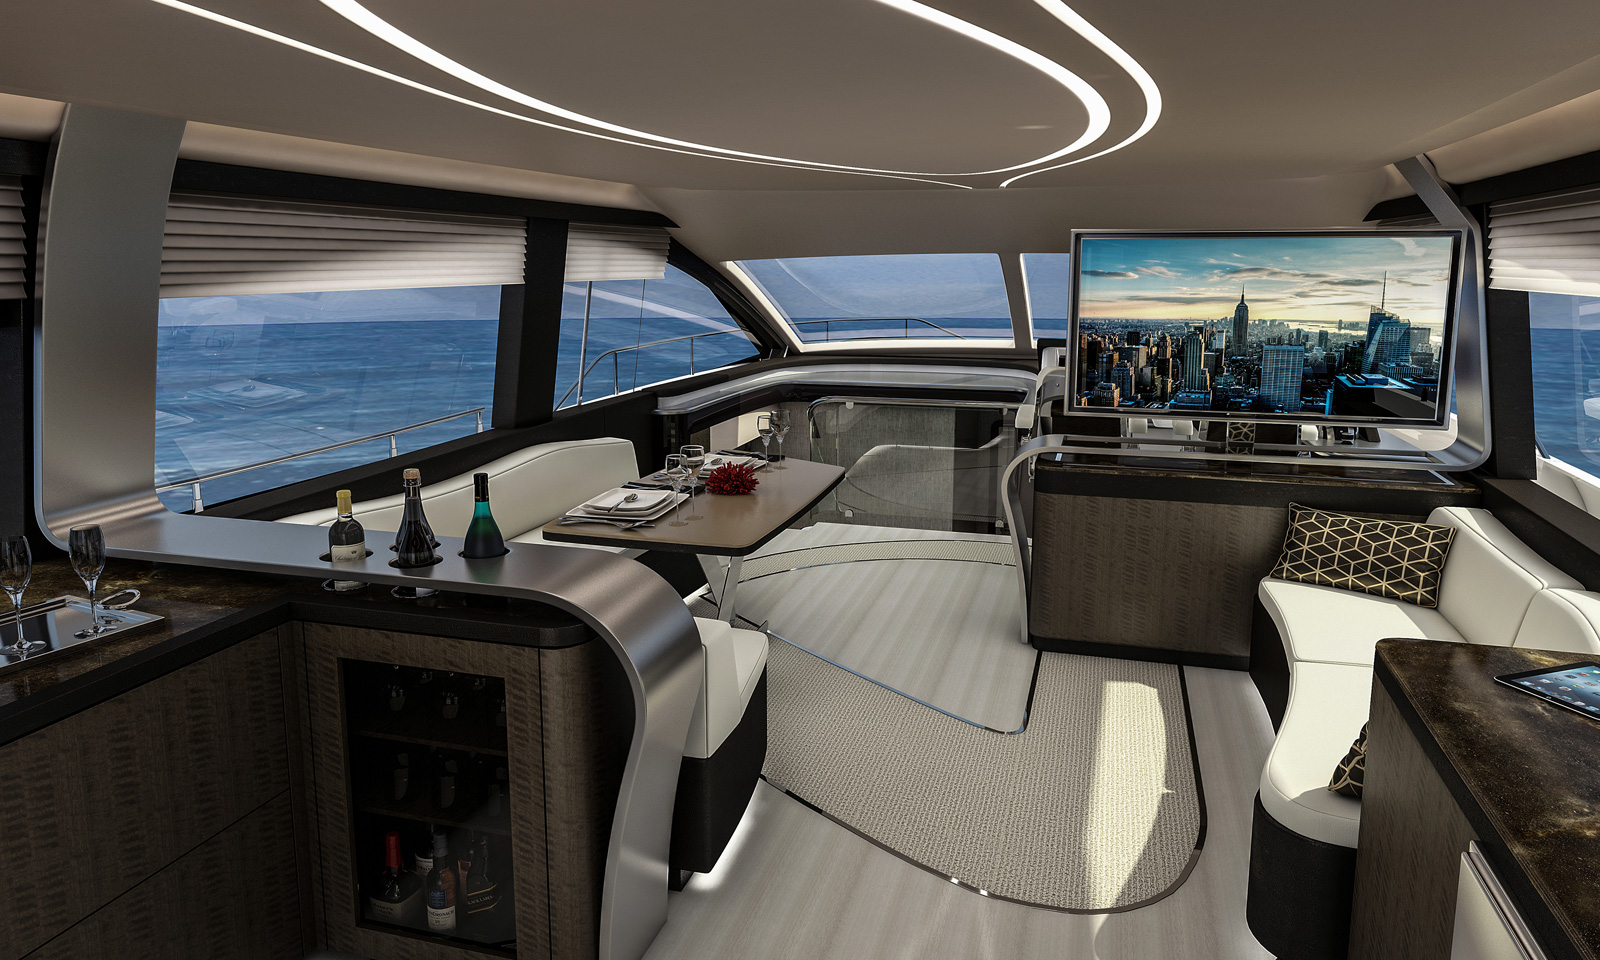 The 65-foot Lexus LY 650 Luxury Yacht